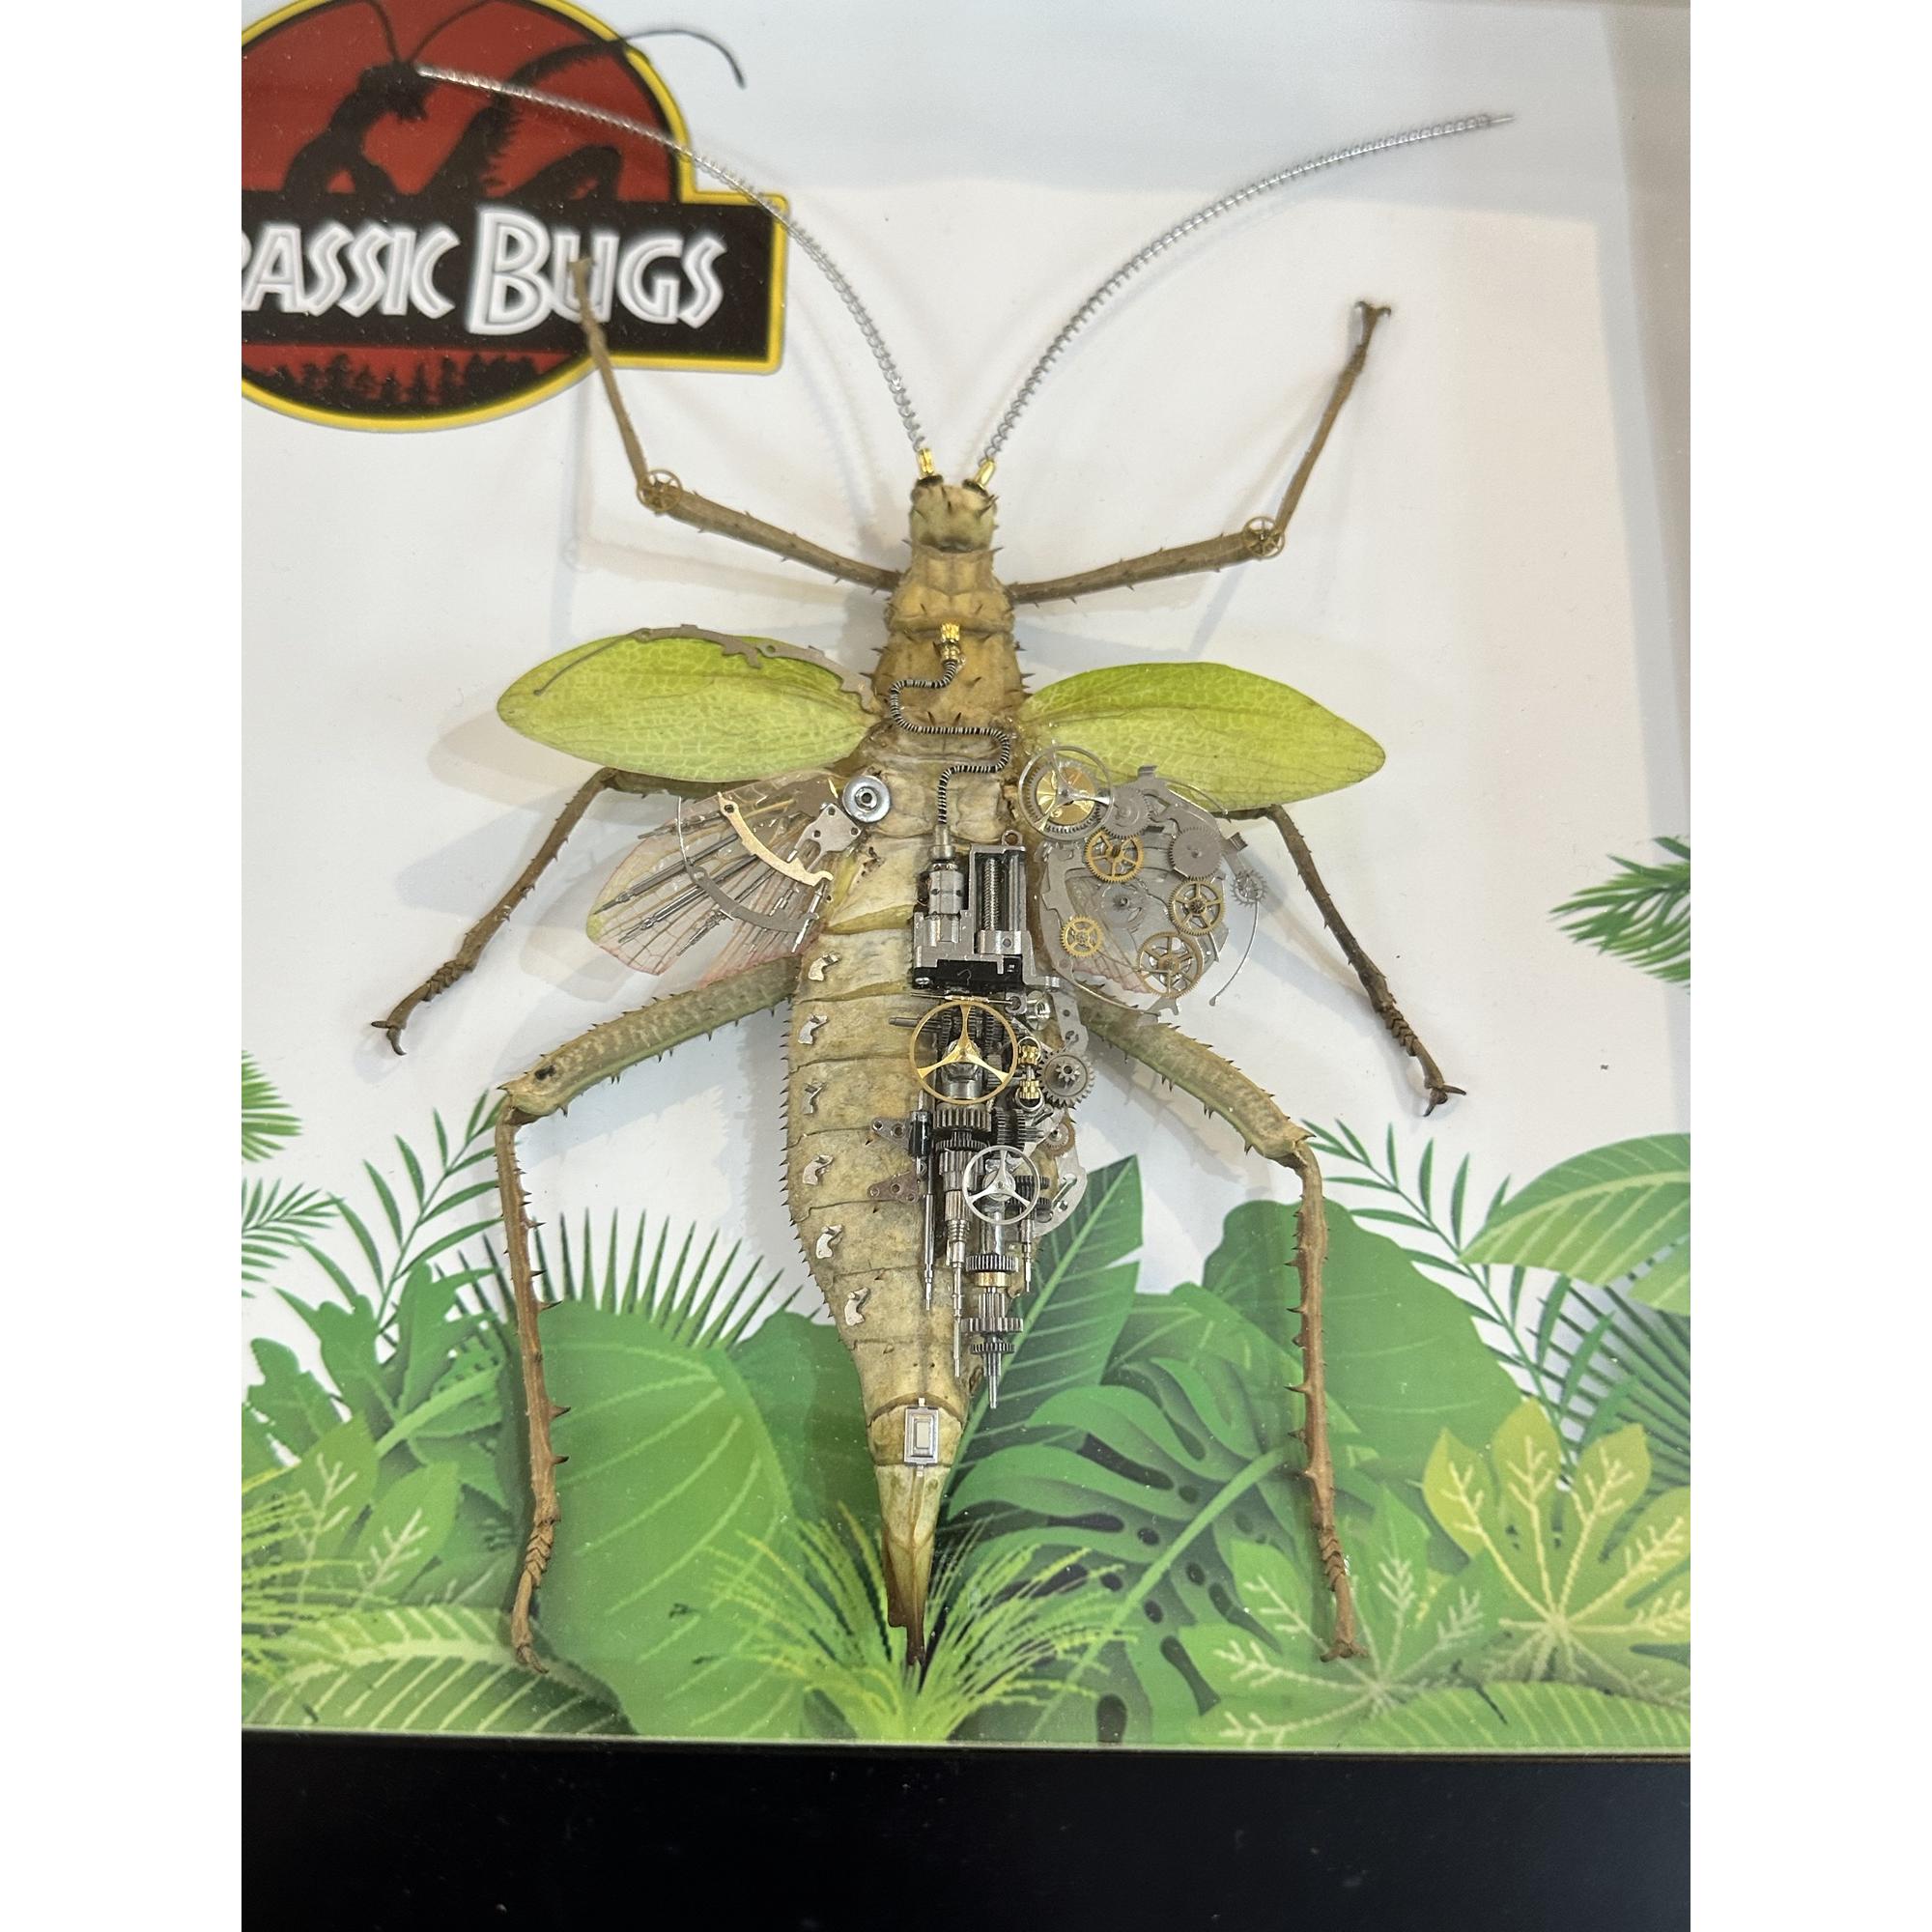 Steampunk Beetle, Jurassic Bugs Prehistoric Online